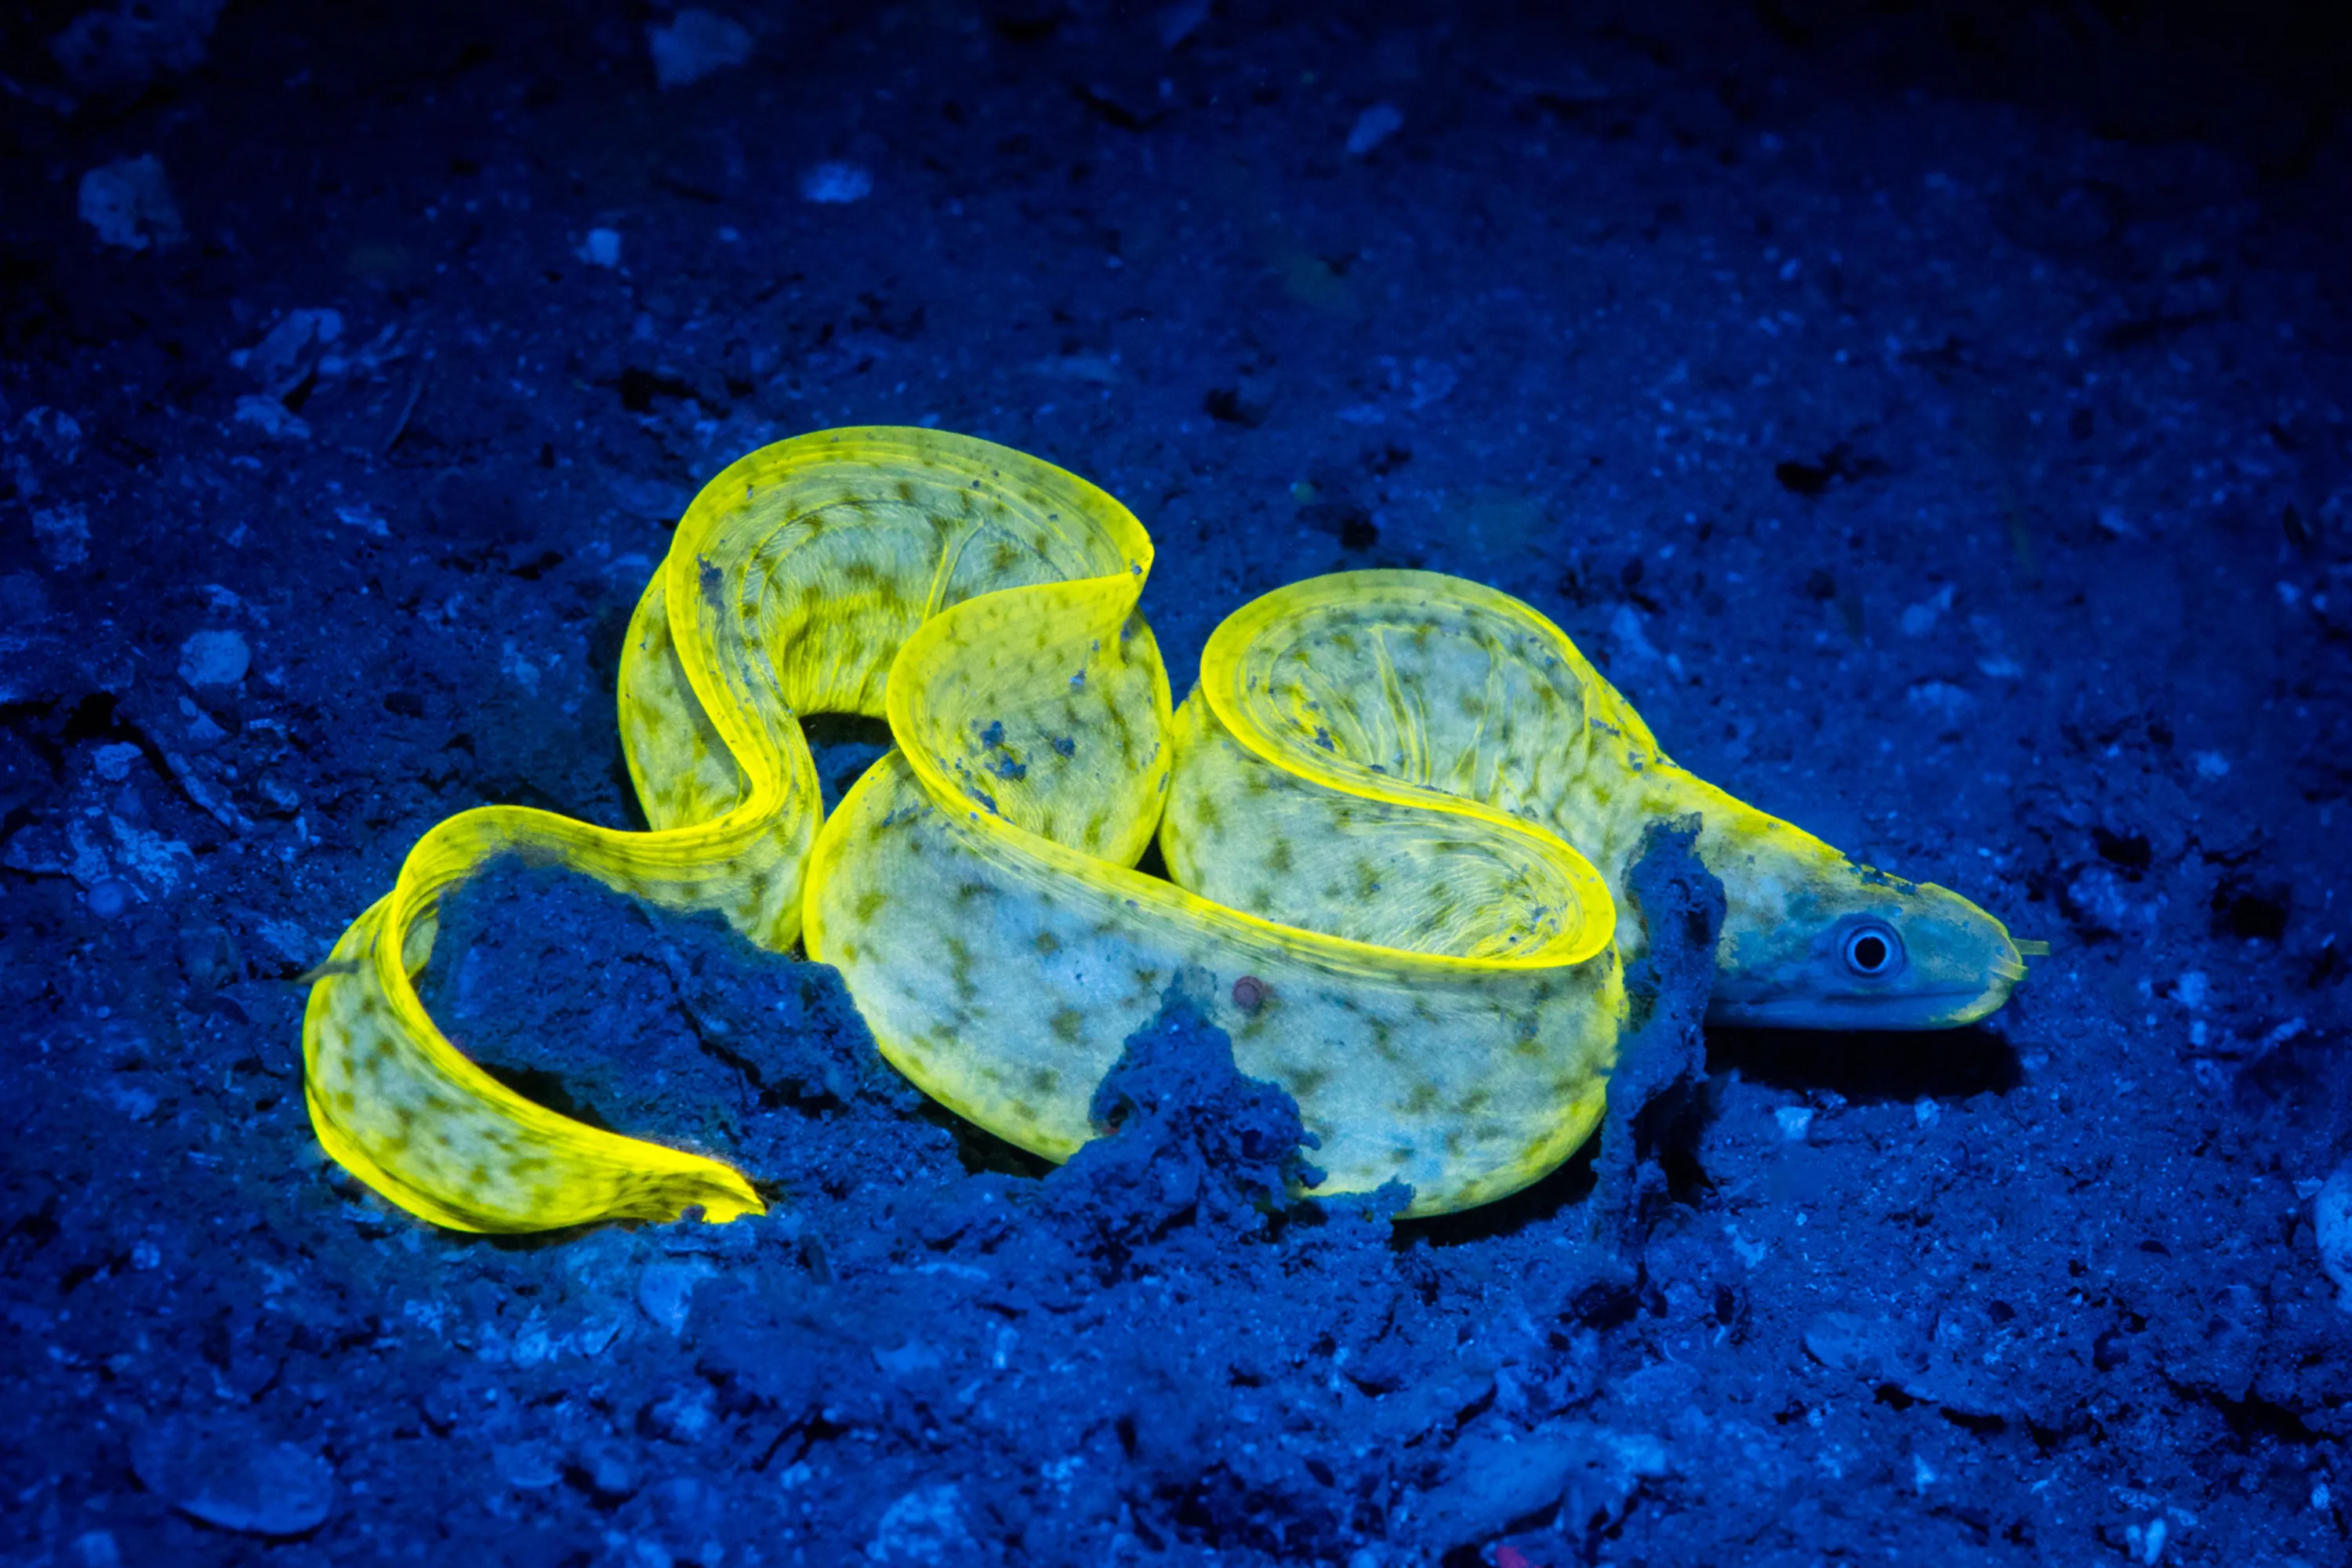 Море живое существо. Ленточная мурена. Биолюминесценция креветки. Ленточная мурена Мальдивы. Биолюминесцентные морские обитатели.